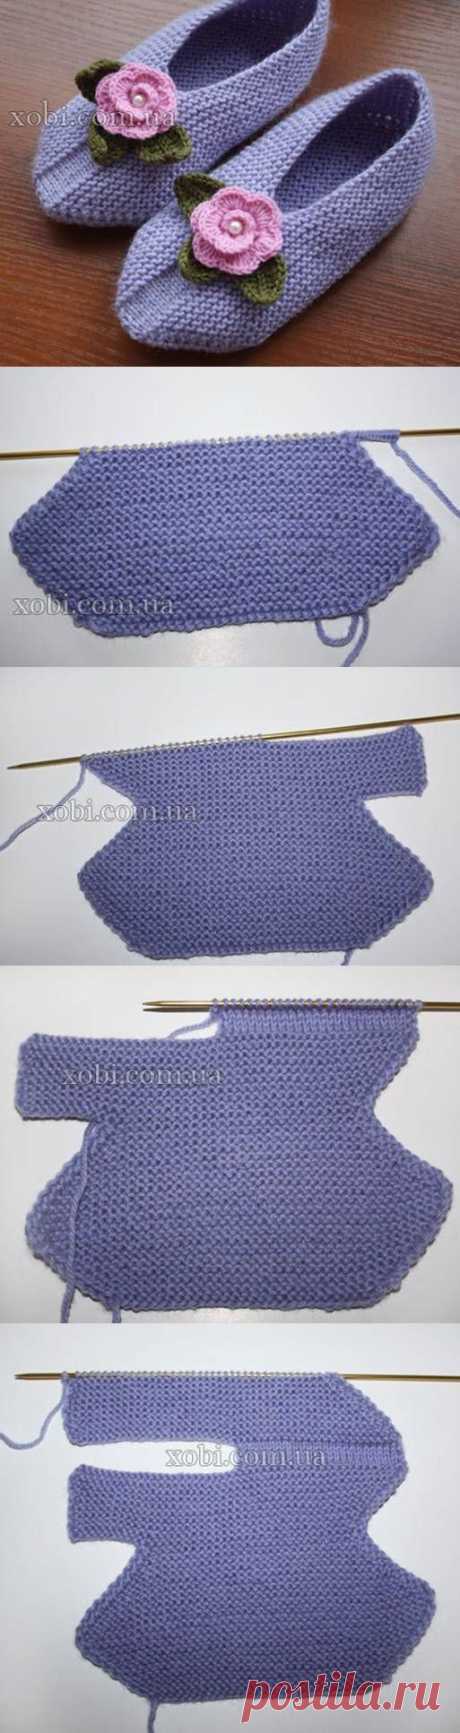 DIY Knitting Slippers DIY Projects | UsefulDIY.com